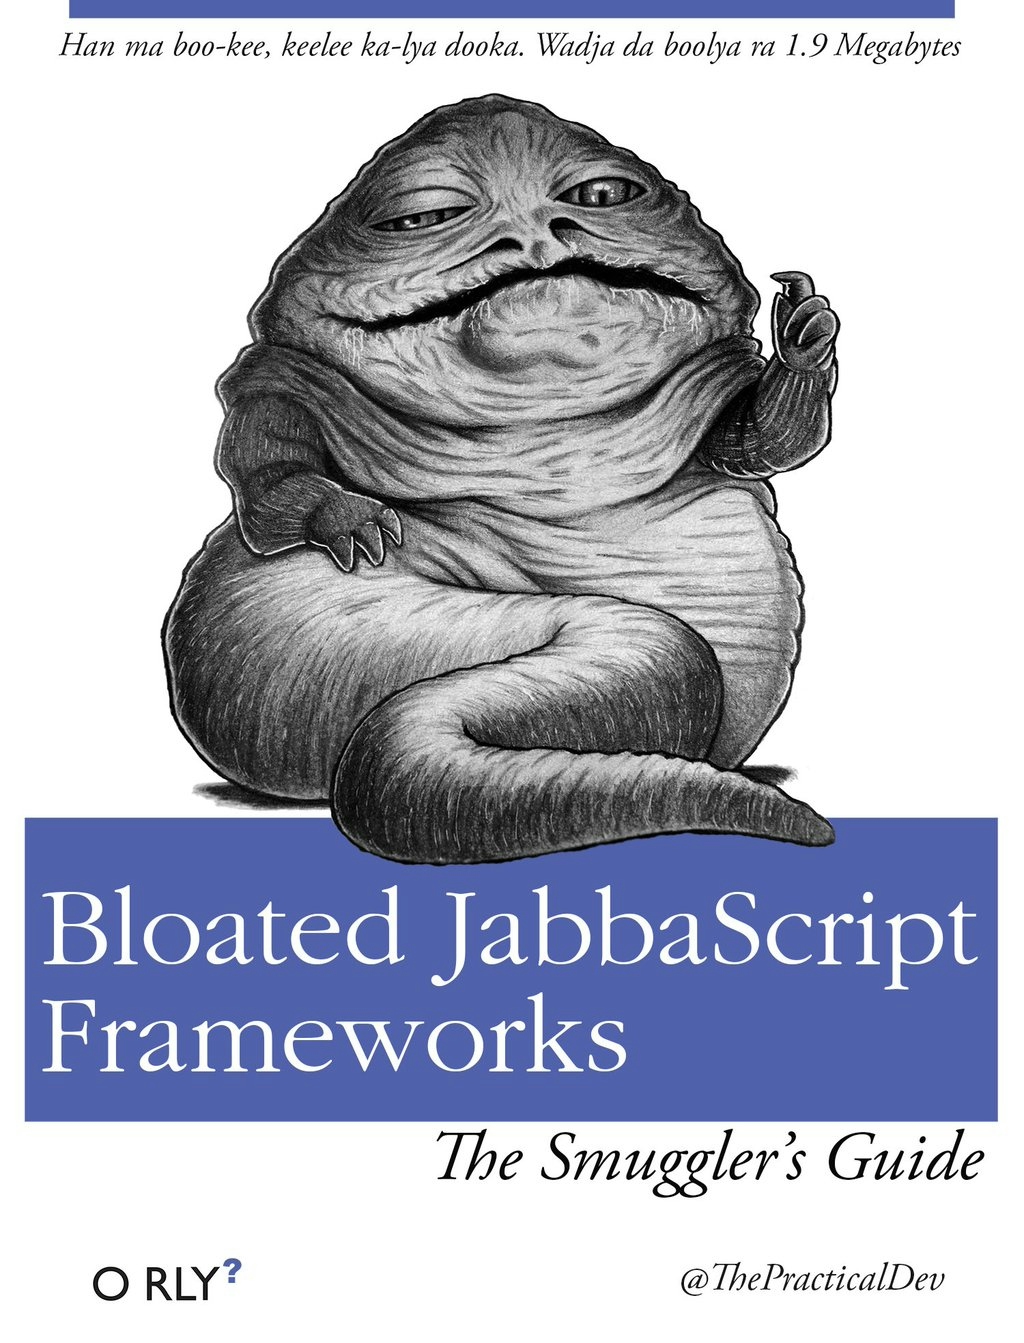 bloated-jabbascript